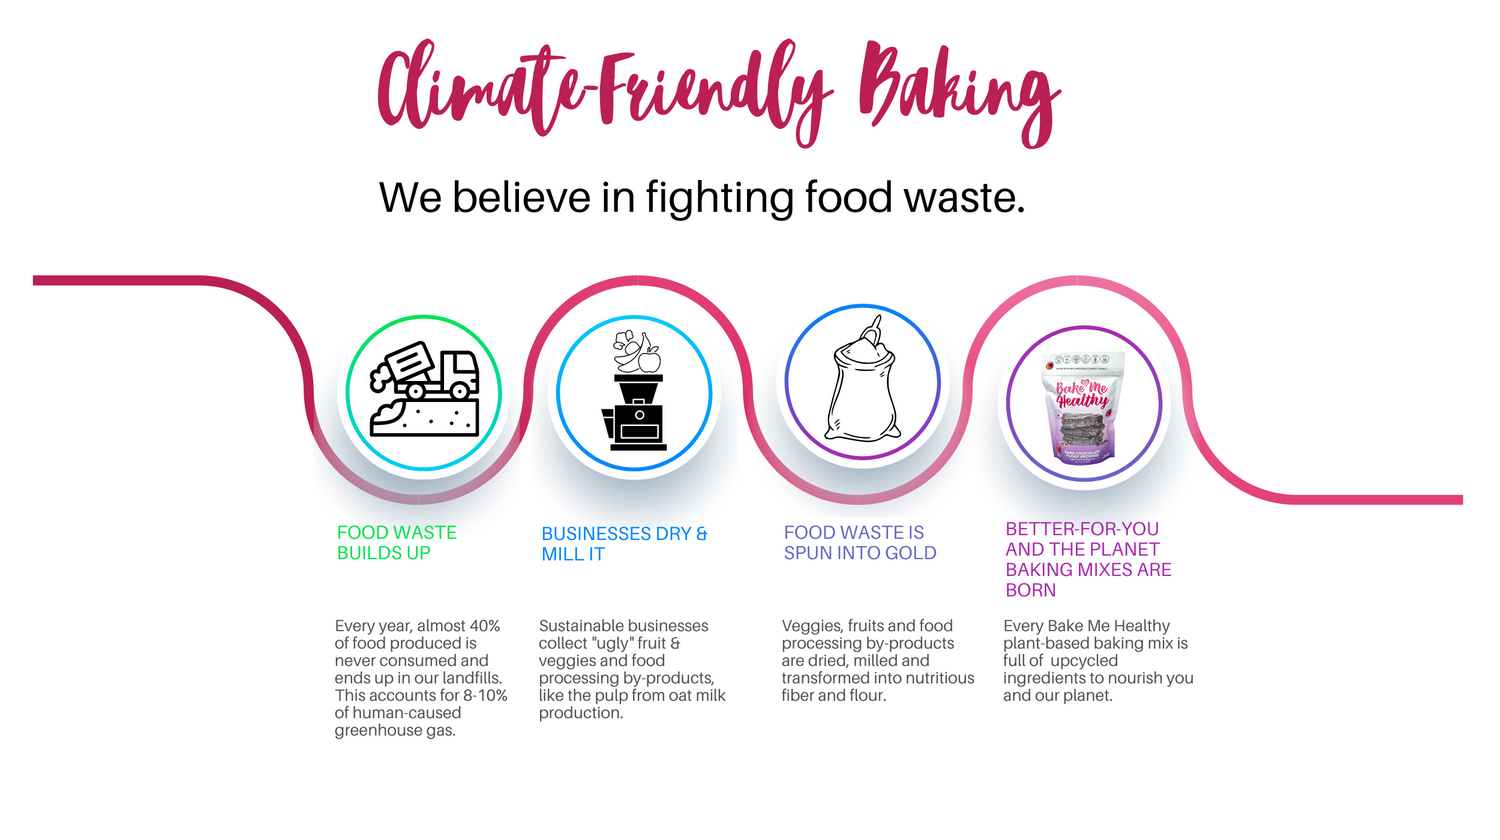 Climate-Friendly Baking. We believe in fighting food waste.